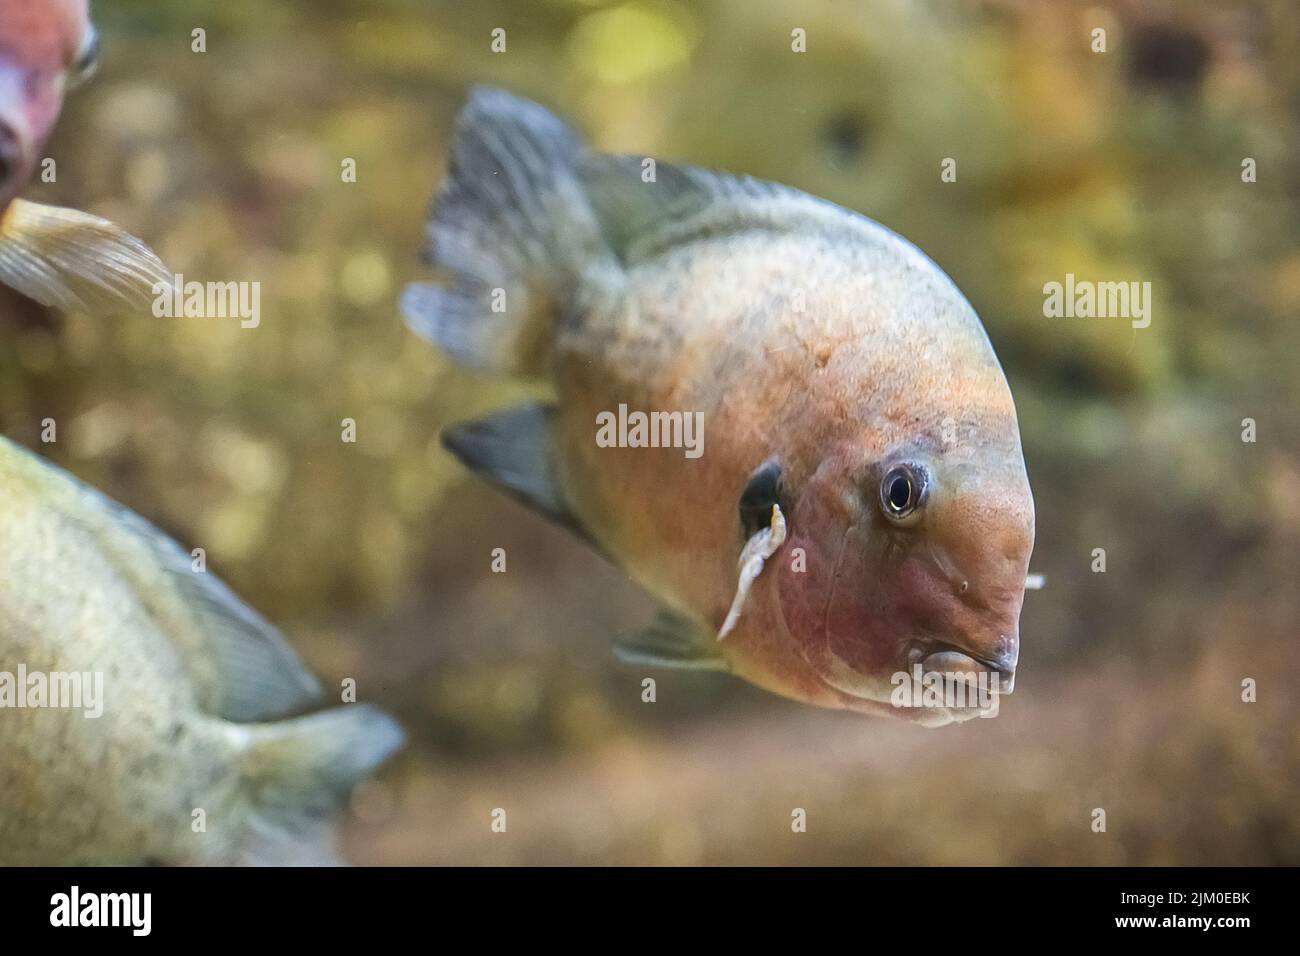 A closeup shot of a Damba cichlid fish swimming underwater Stock Photo